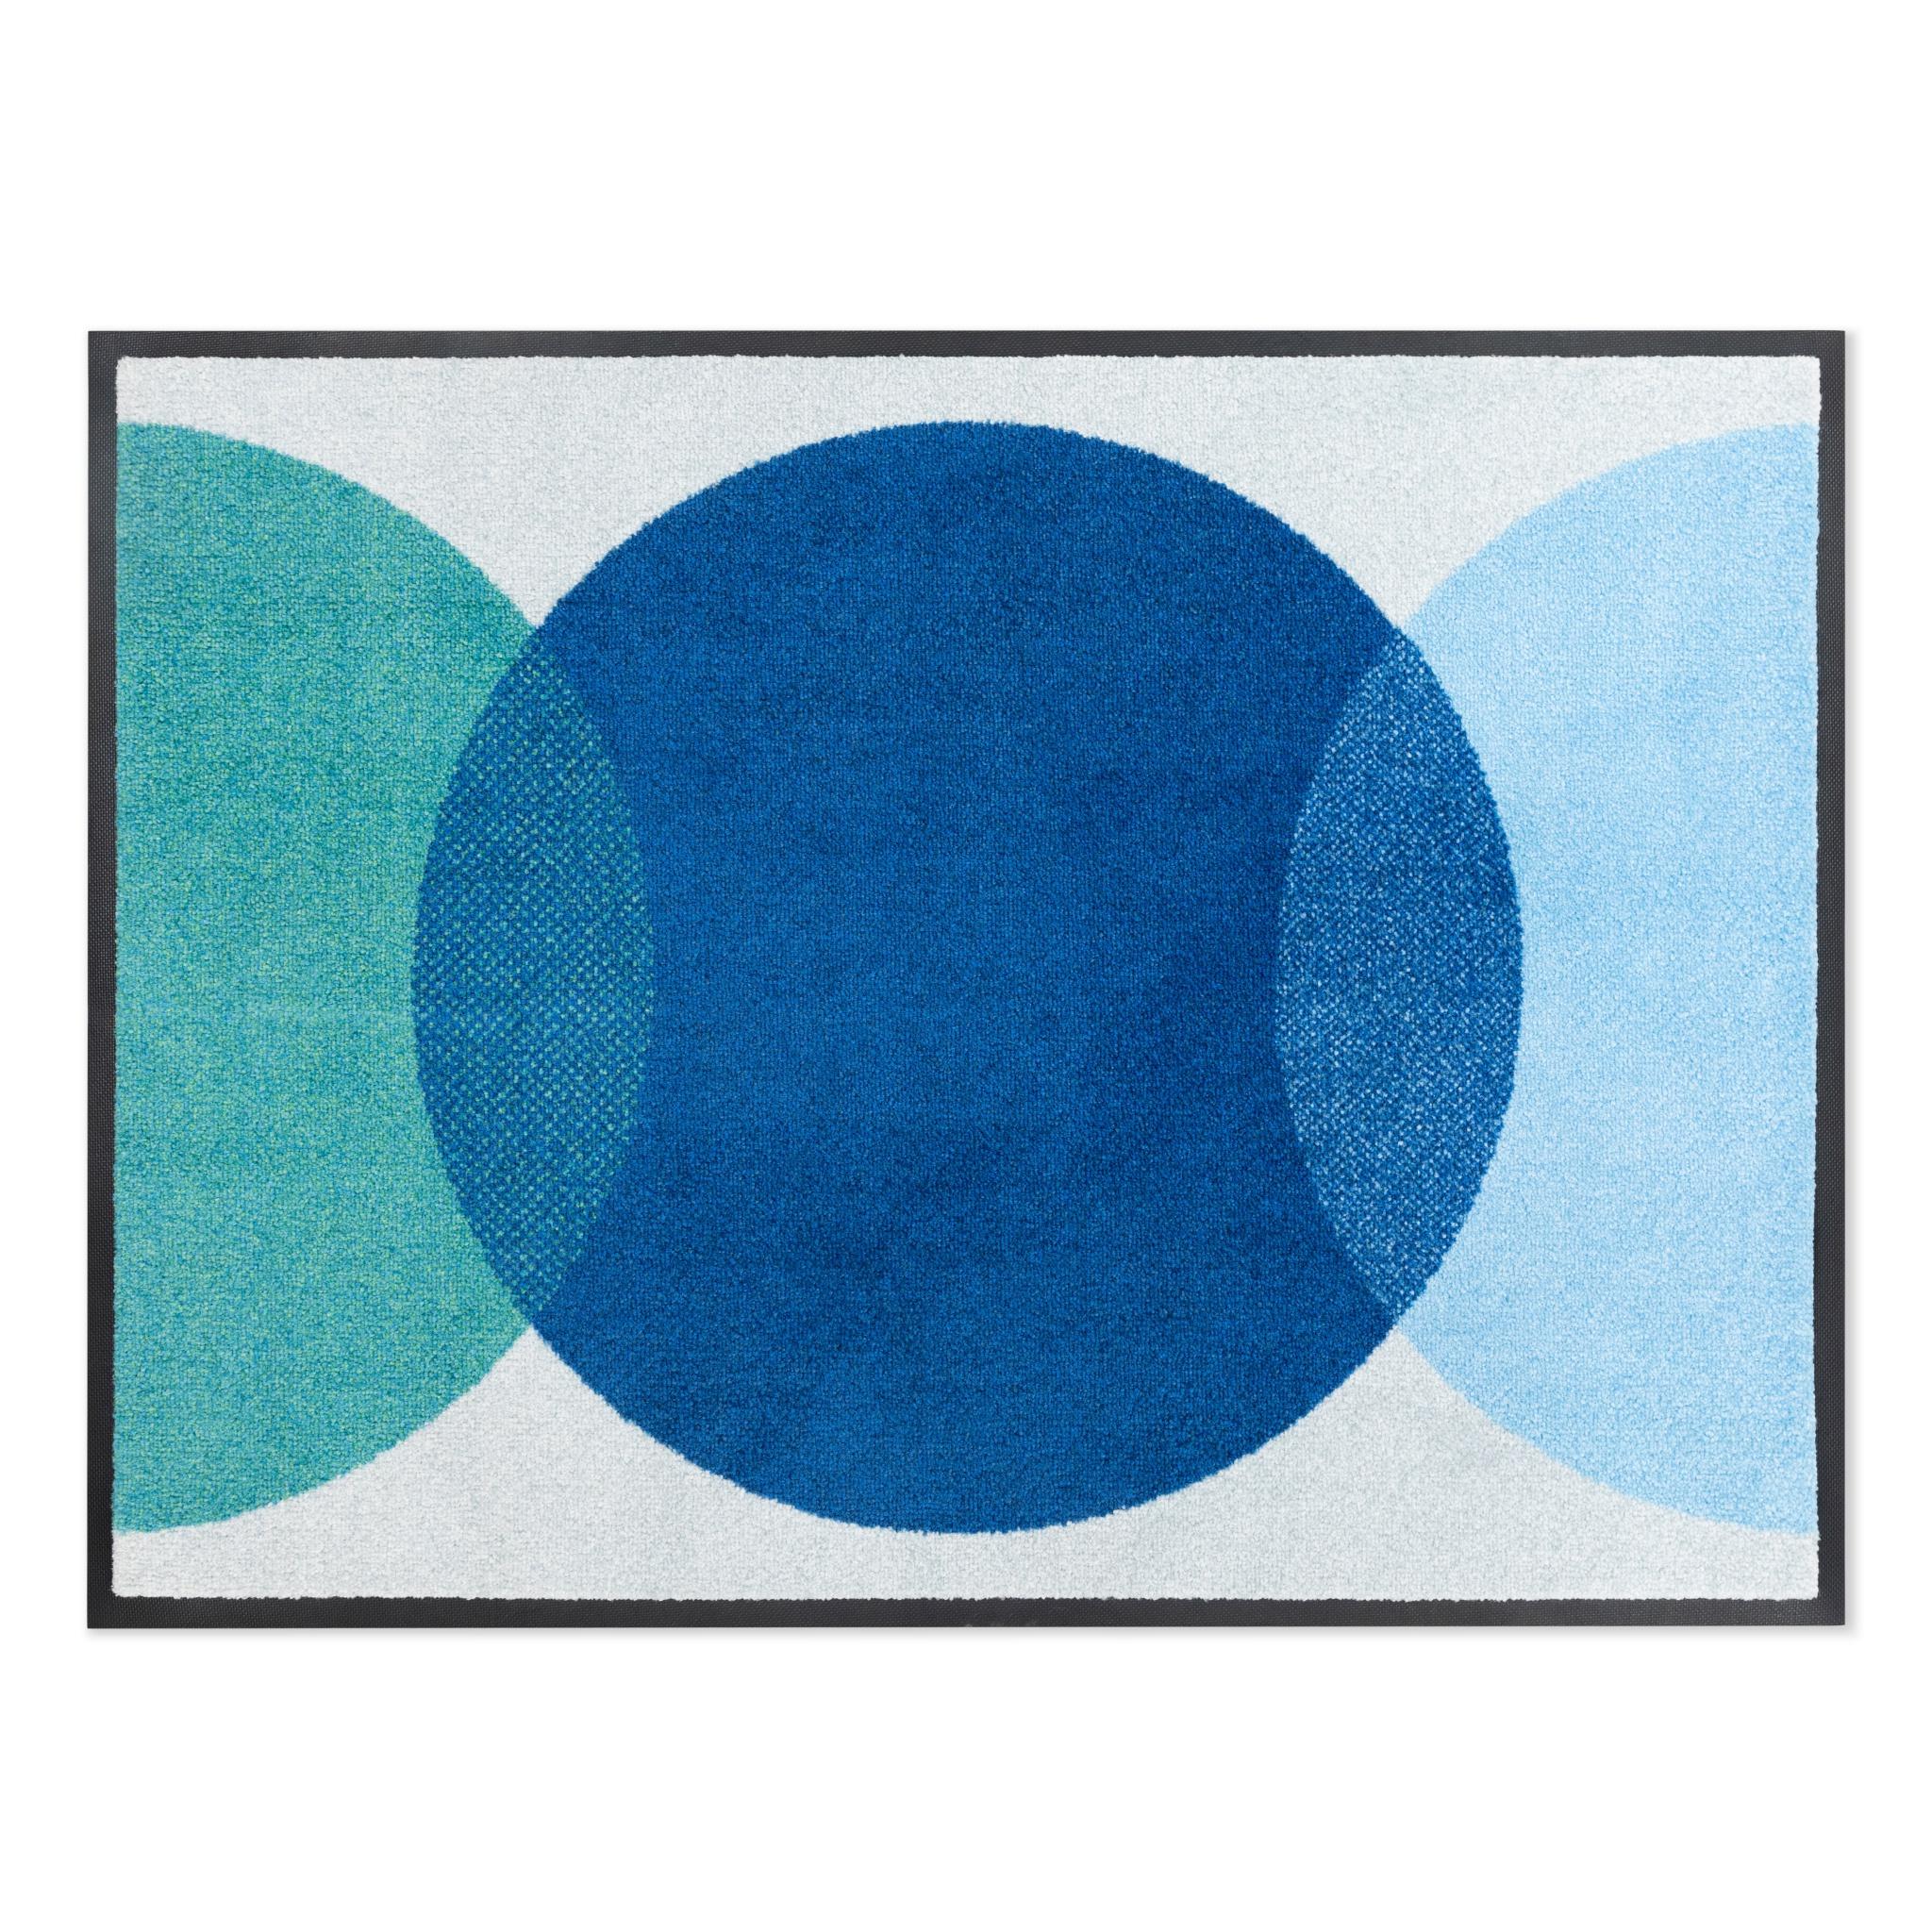 HEYMAT SOPTOM BLUE, 85x115cm